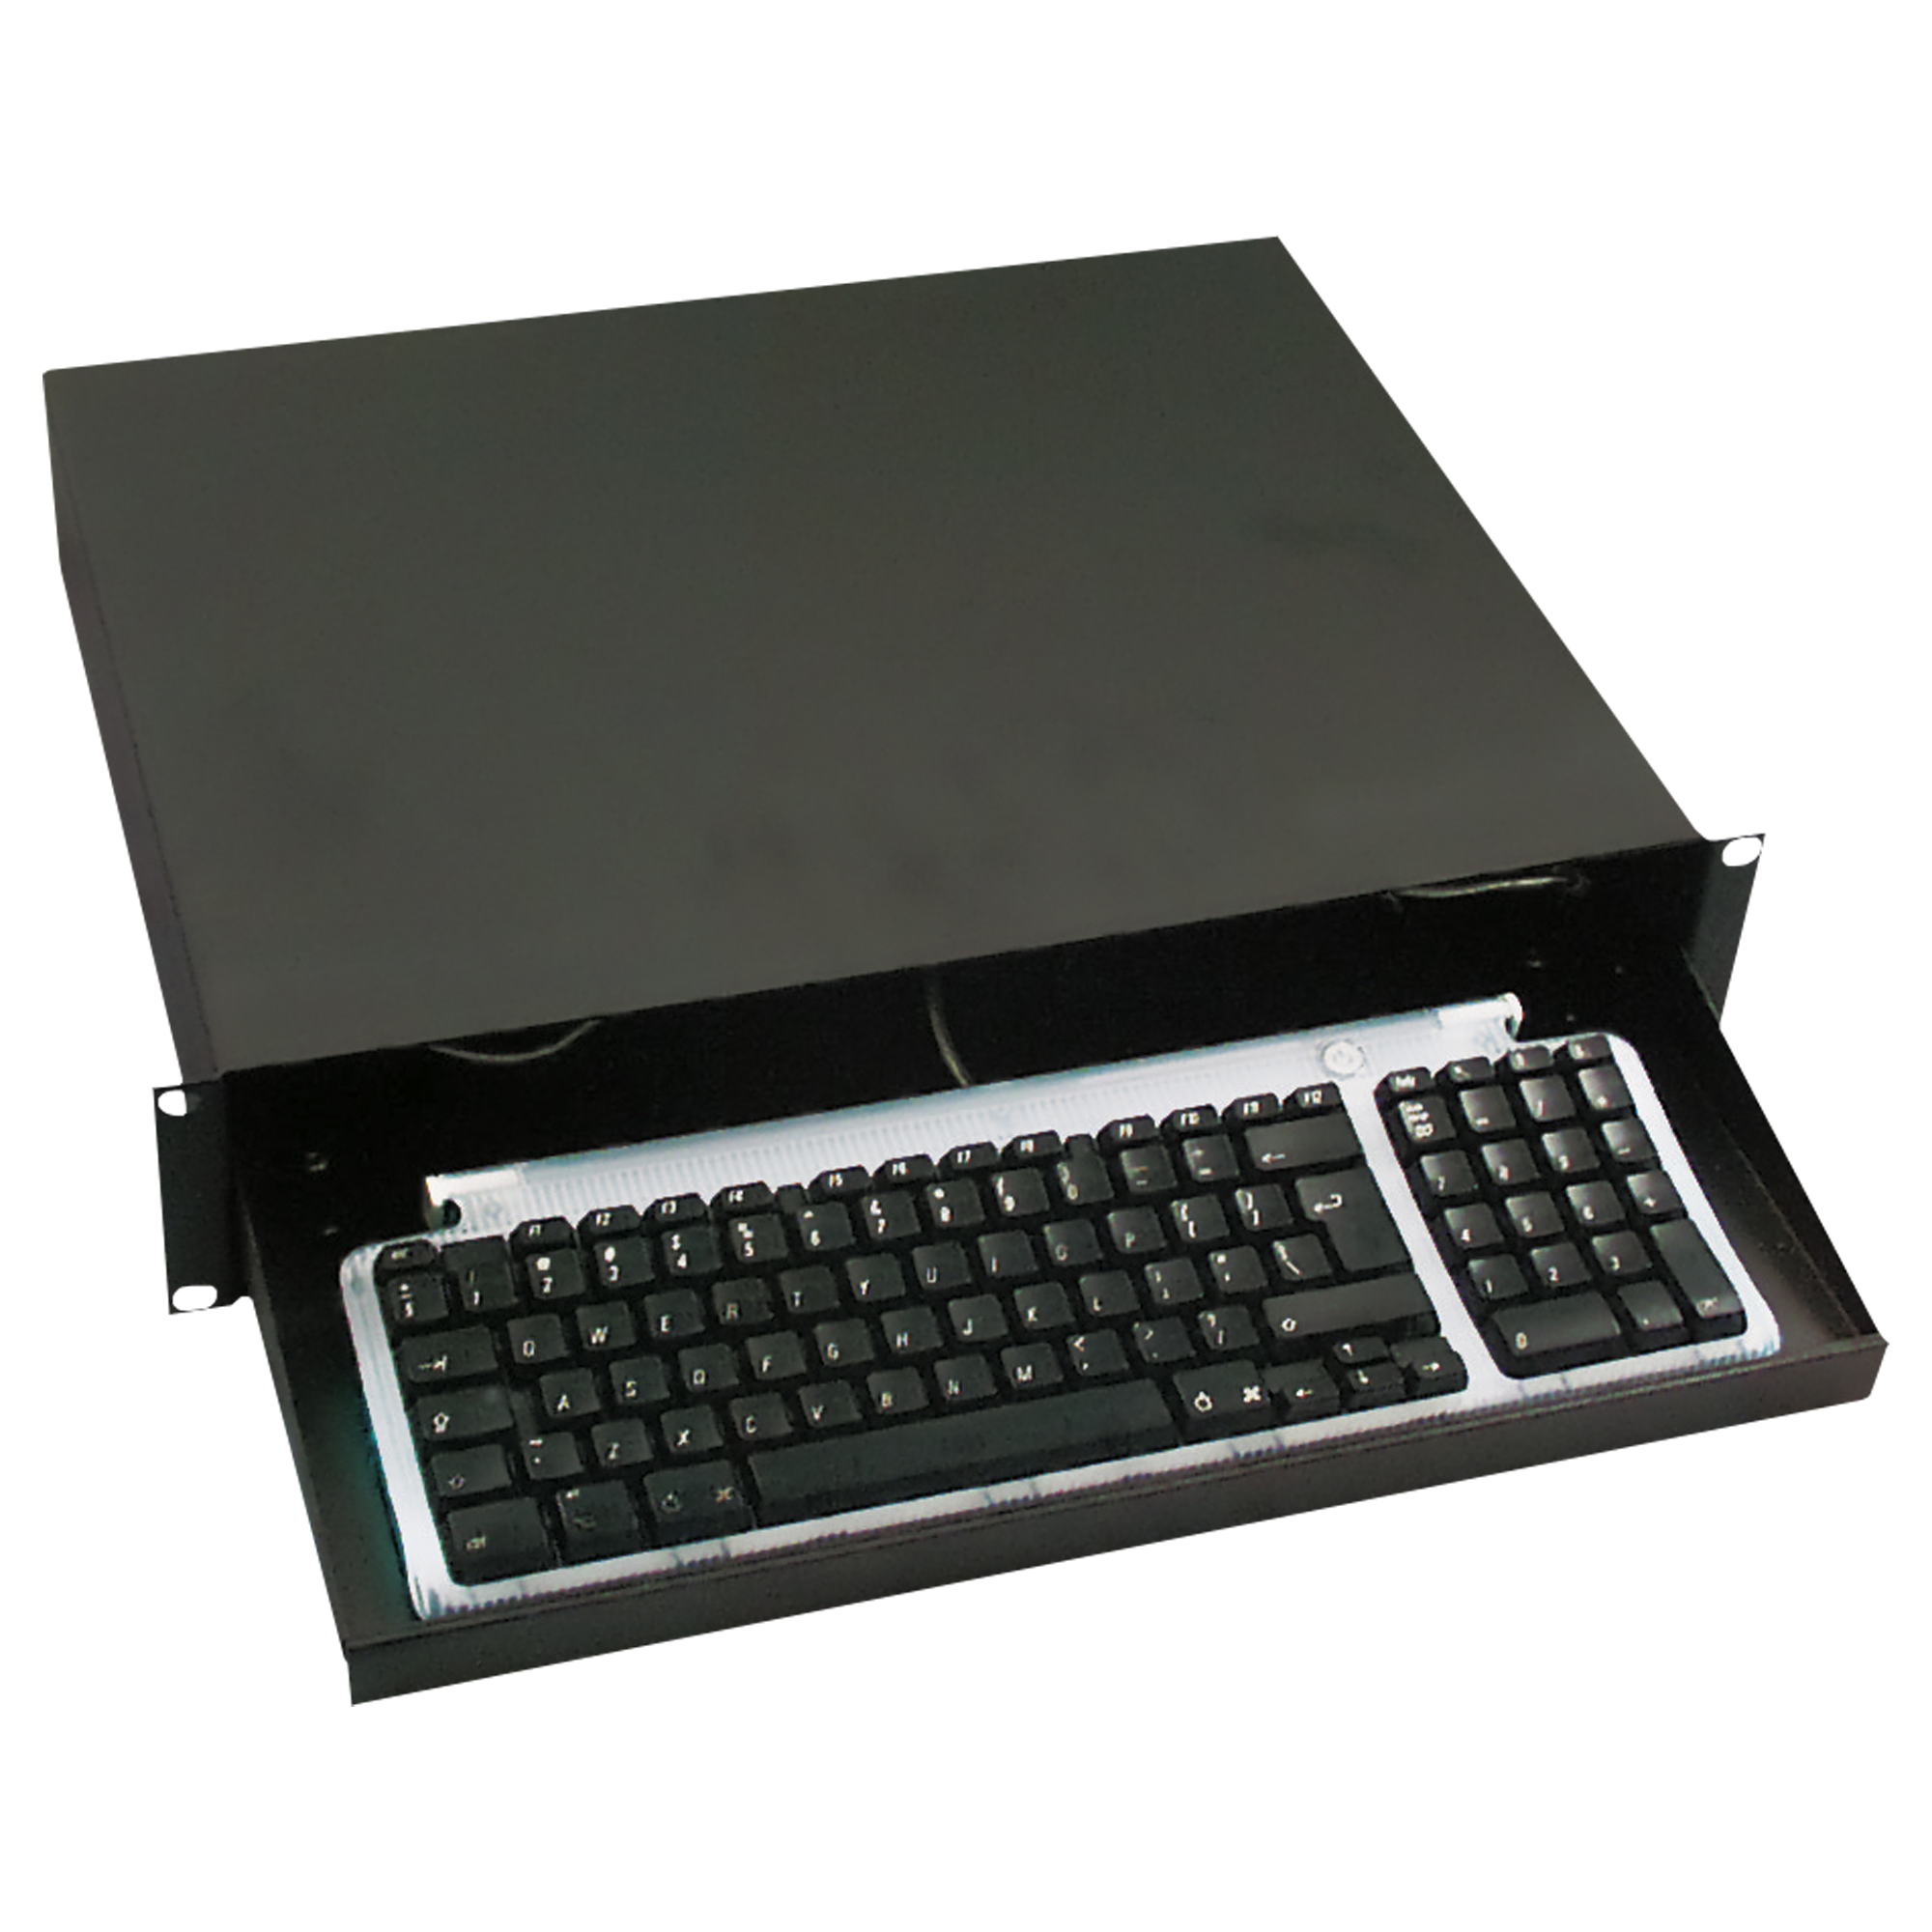 Showgear 19 Inch Keyboard Drawer Tastaturablage